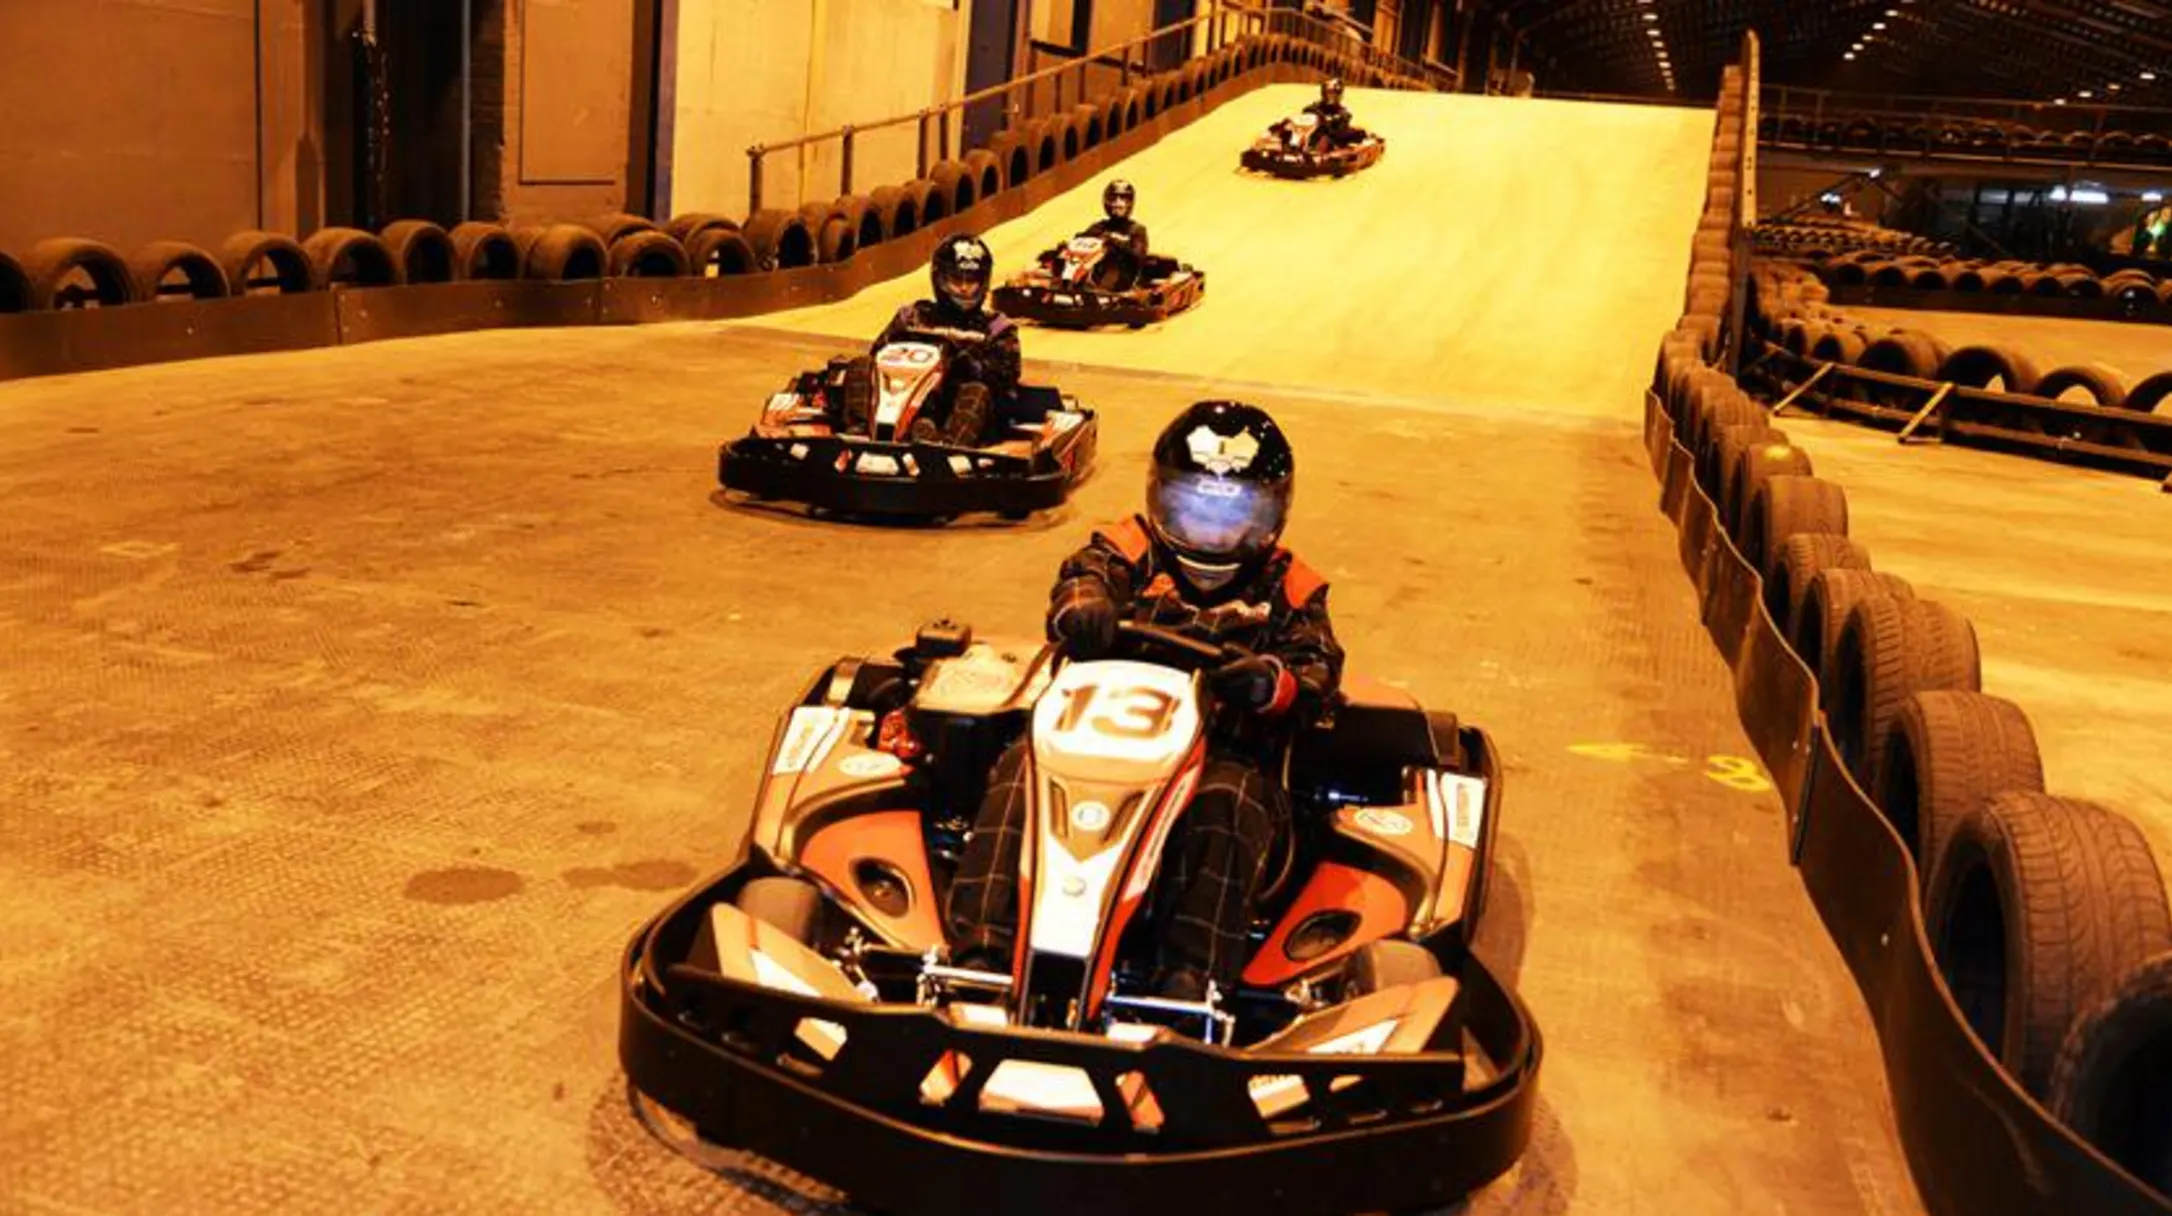 date ideas in Newcastle - team sport go karting